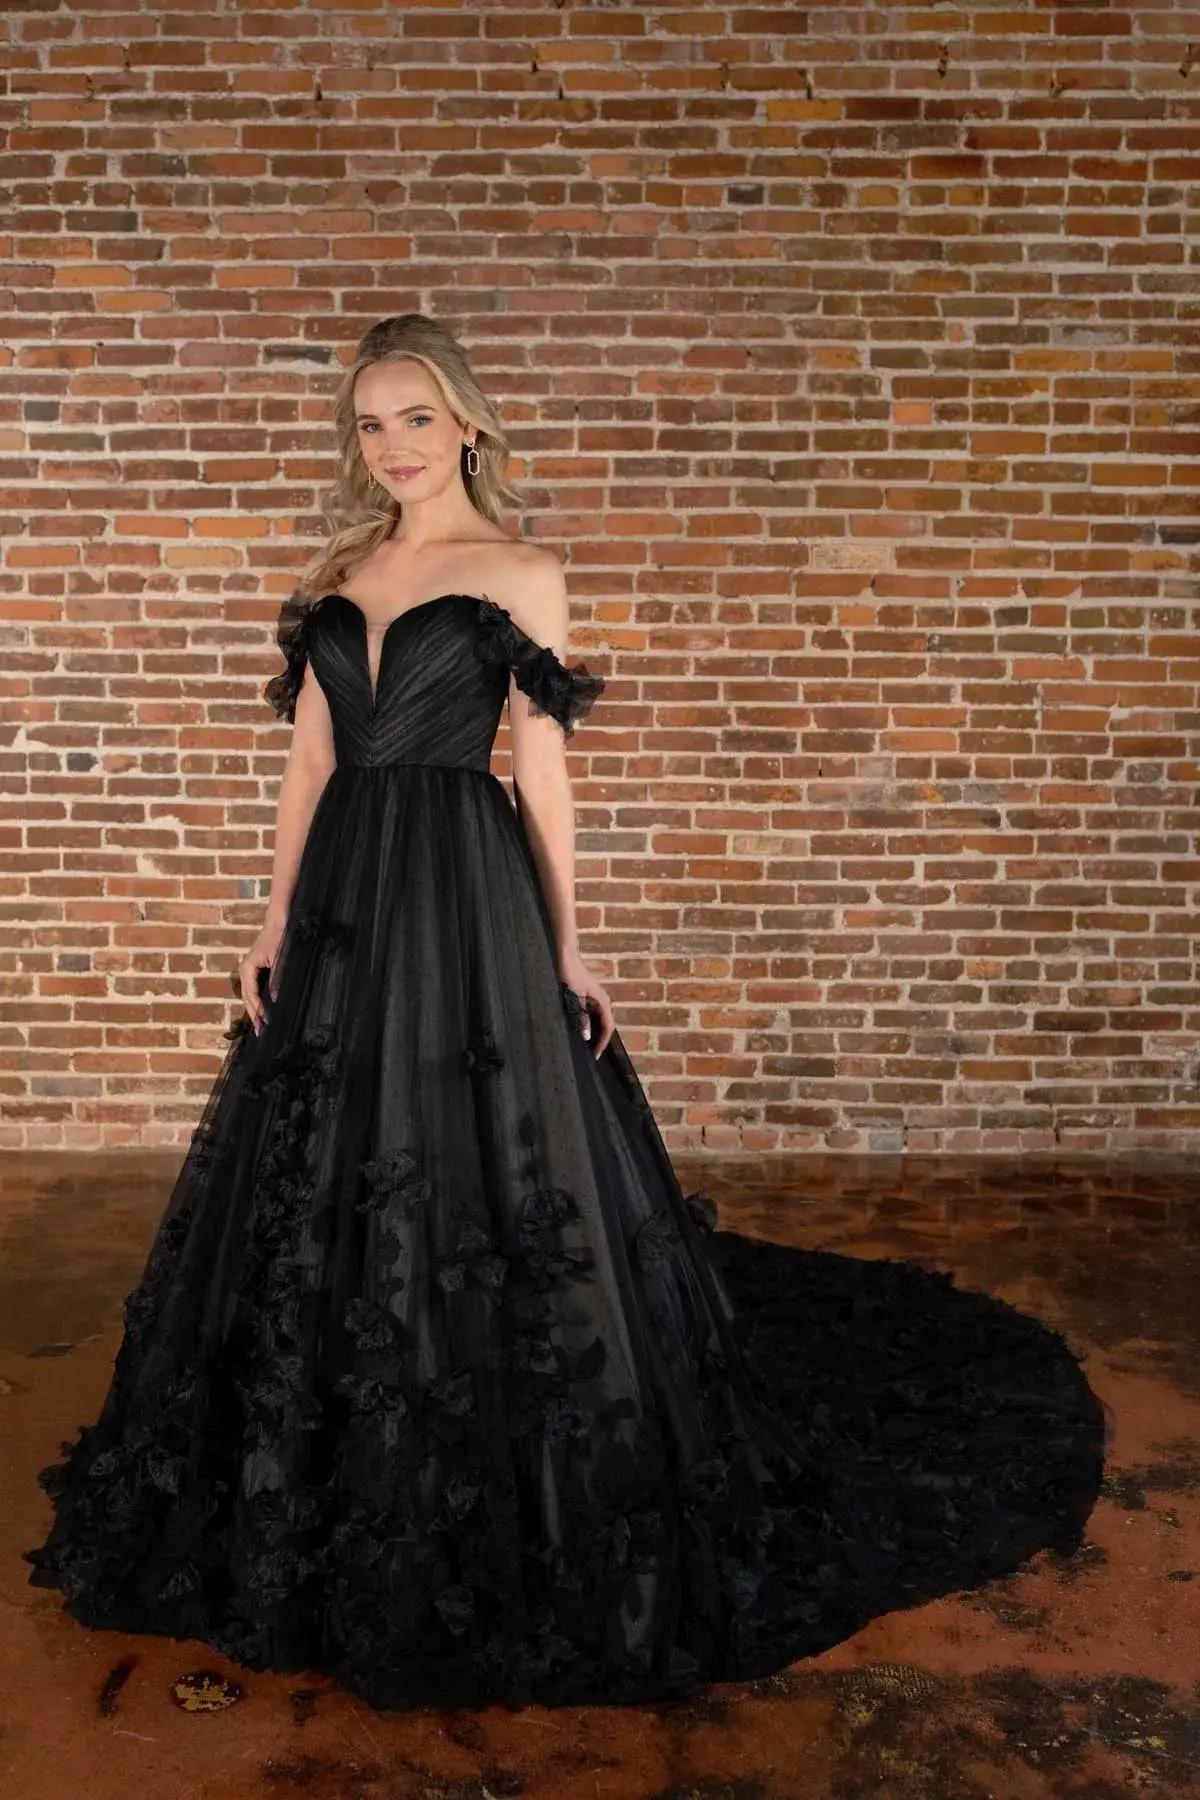 Daring Elegance: Embracing Modern Romance with Black Wedding Dresses Image